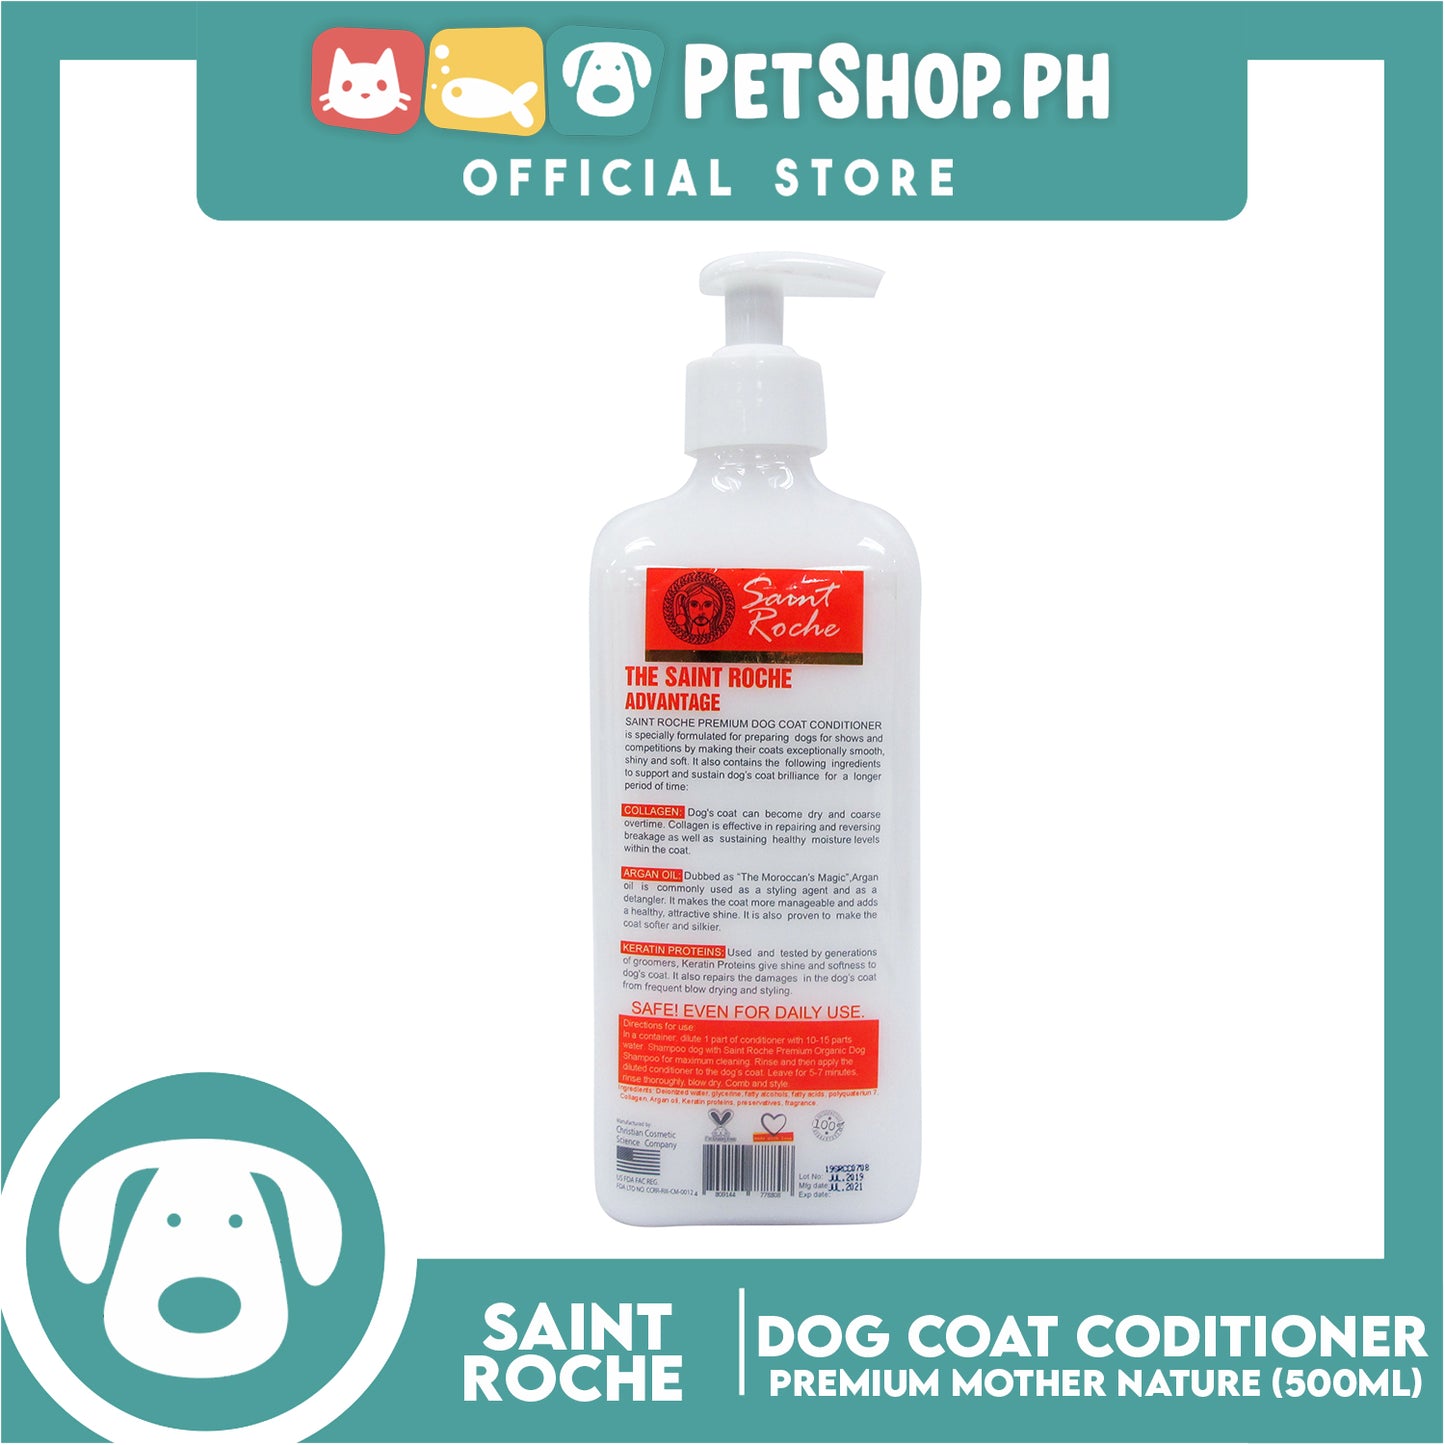 Saint Roche Premium Dog Coat Conditioner (Mother Scent) 500ml For Dog Show Preparation